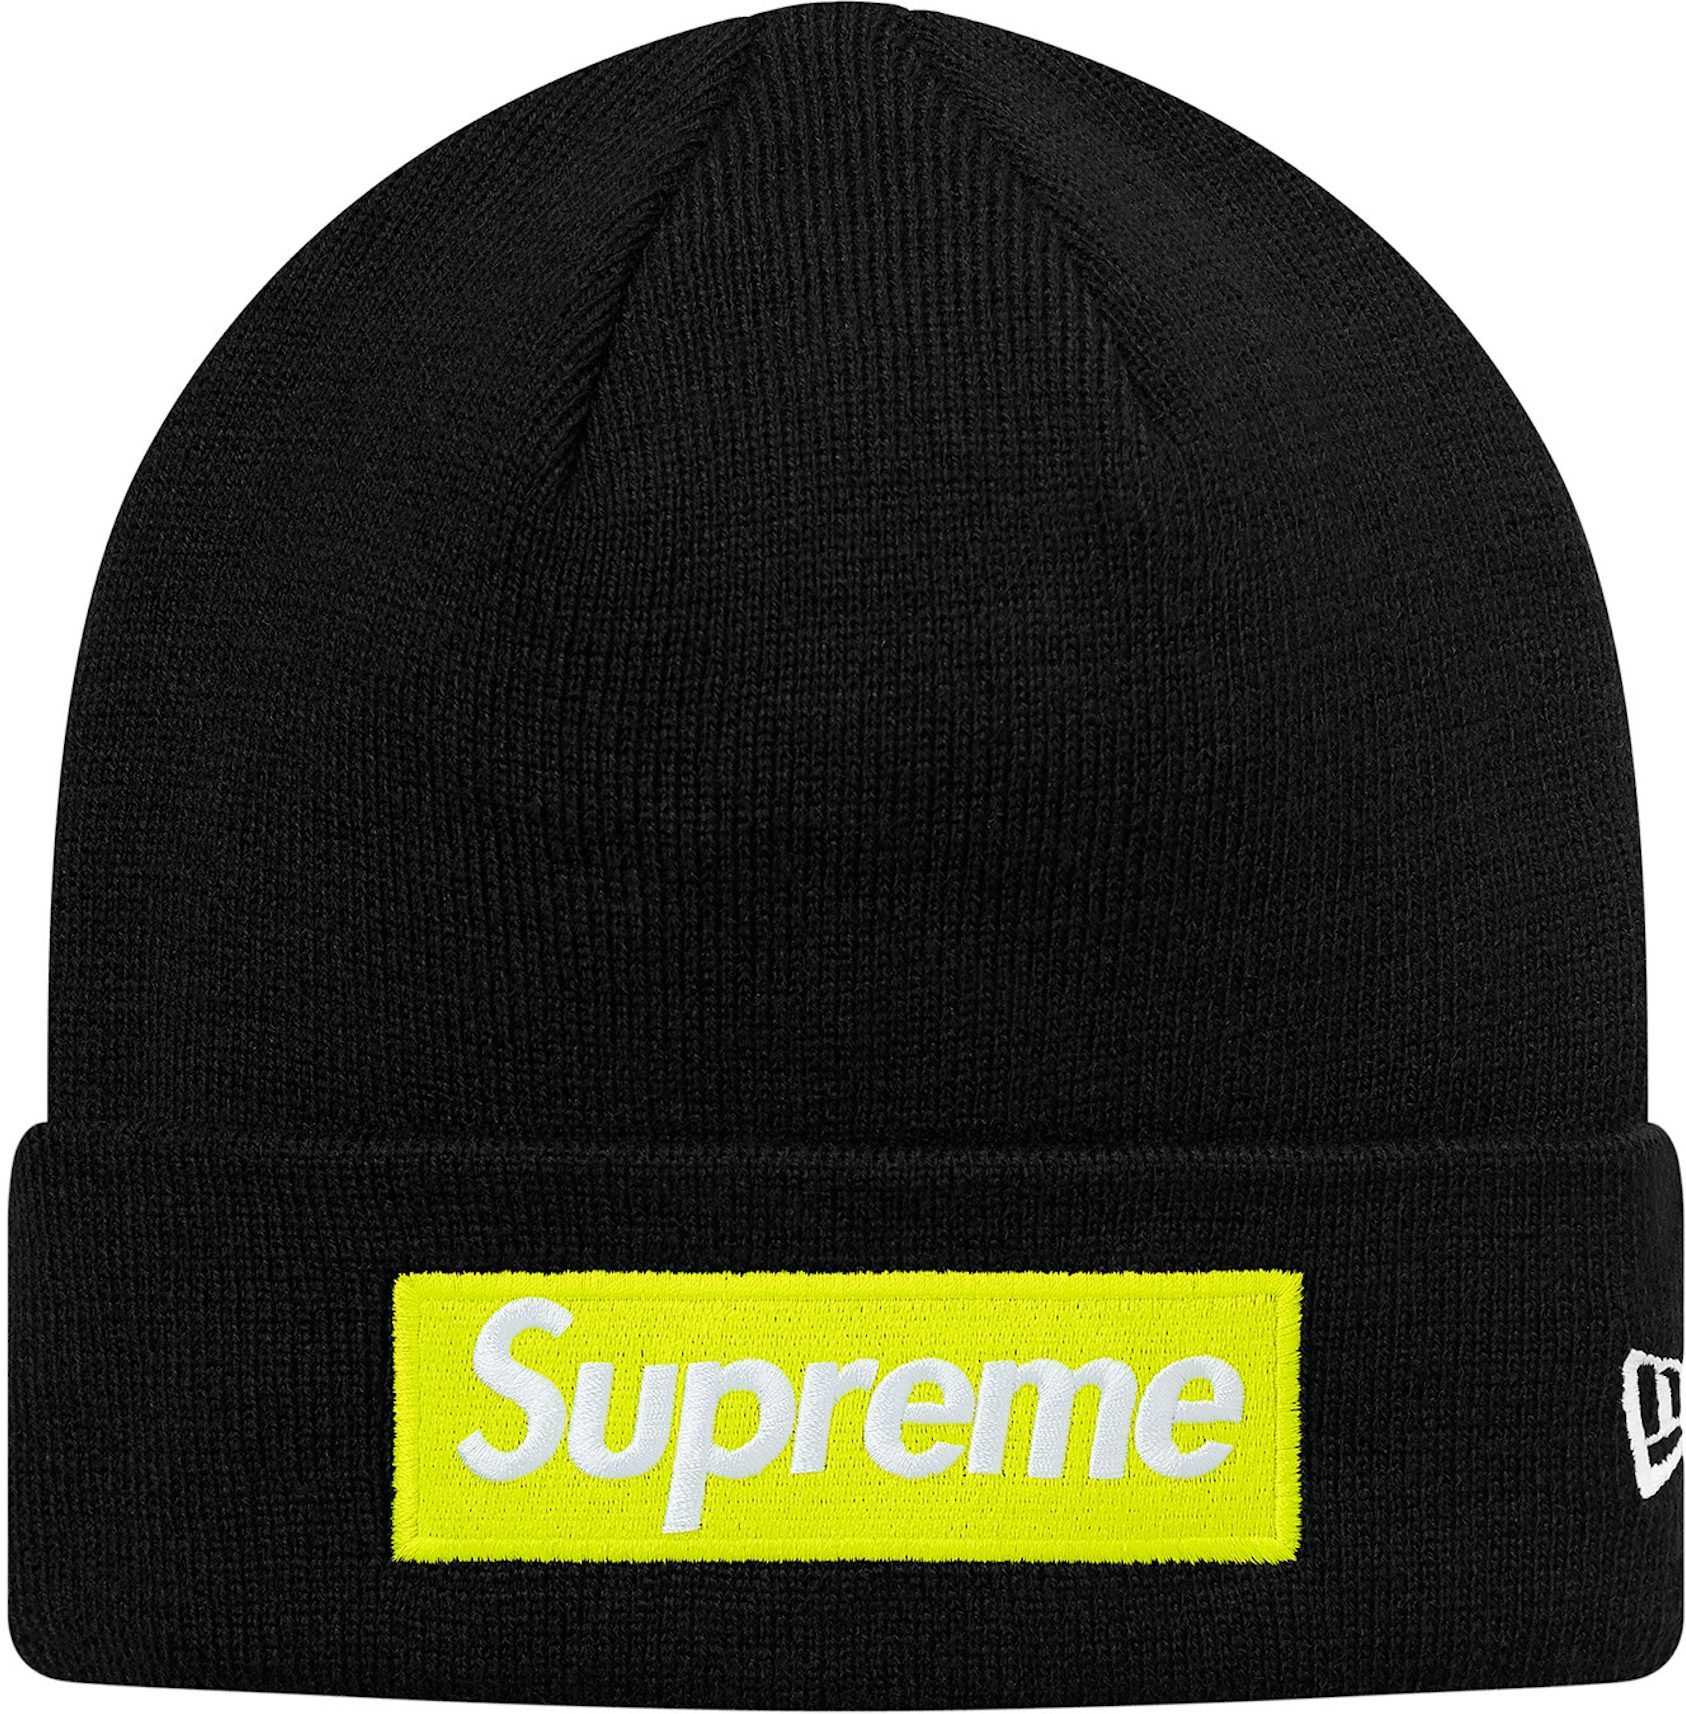 Supreme x New Era Box Logo Beanie 'Black' | Men's Size Onesize